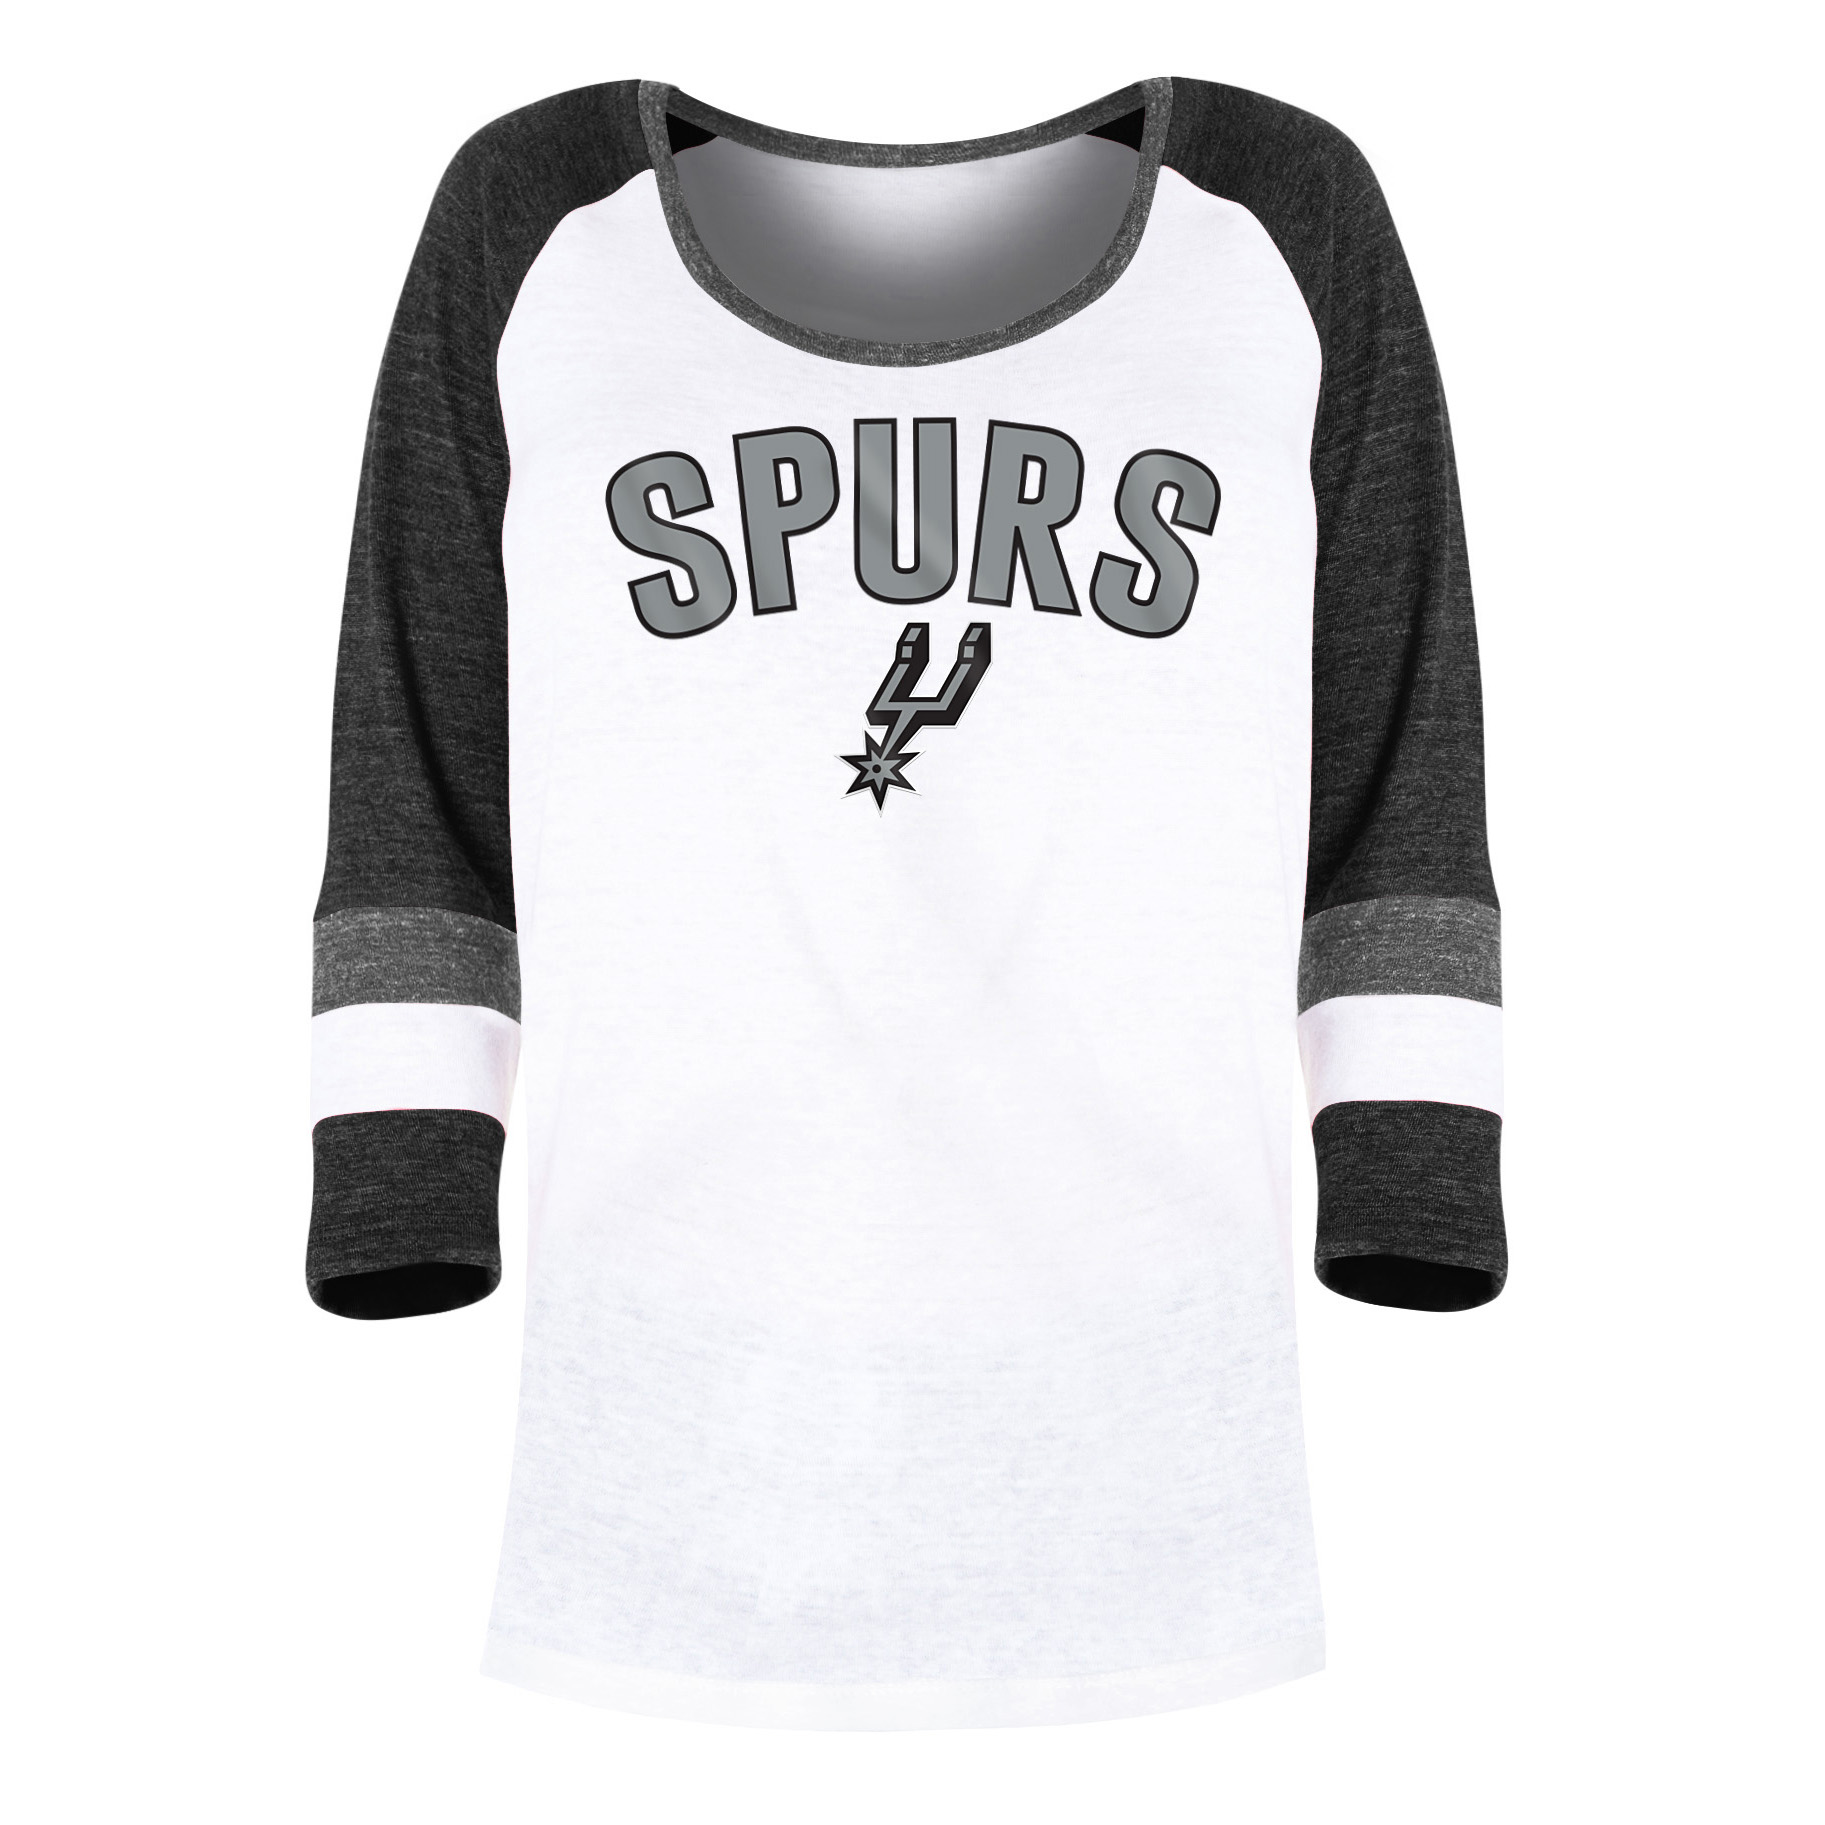 San Antonio Spurs City Edition Men's Nike NBA Long-Sleeve T-Shirt